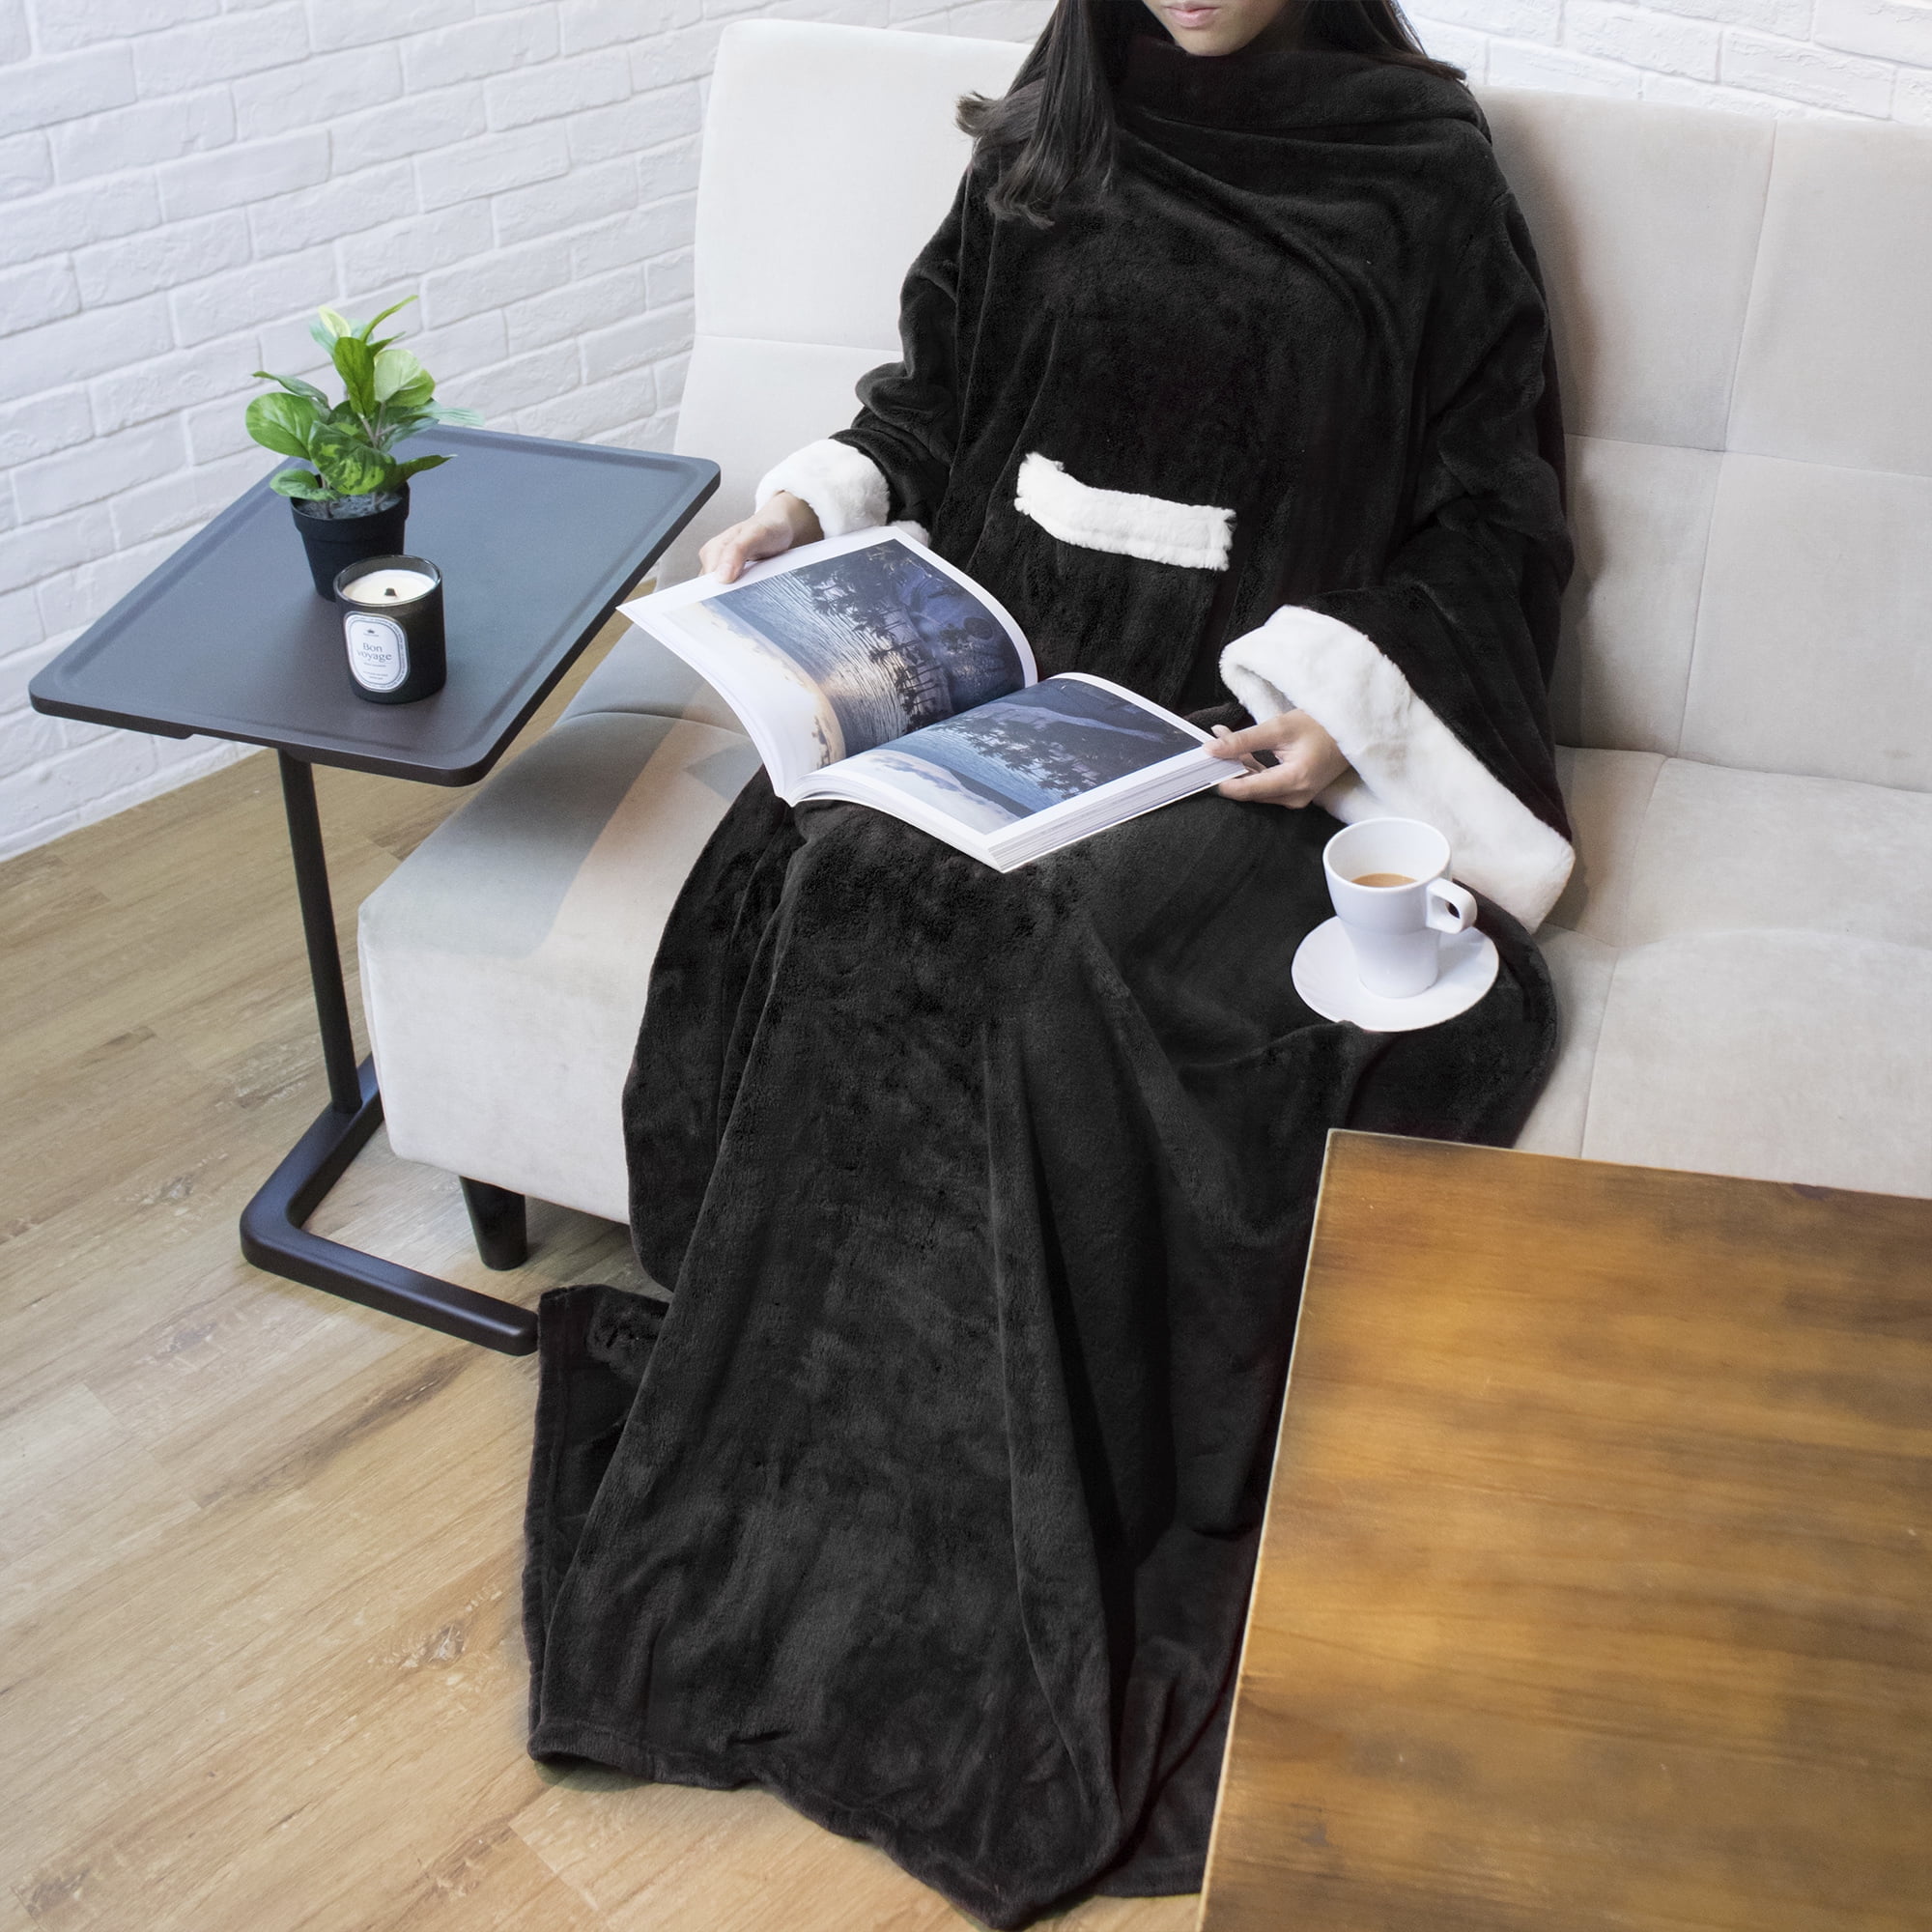 PAVILIA Fleece Blanket with Sleeves for Women Men Adults, Wearable ...